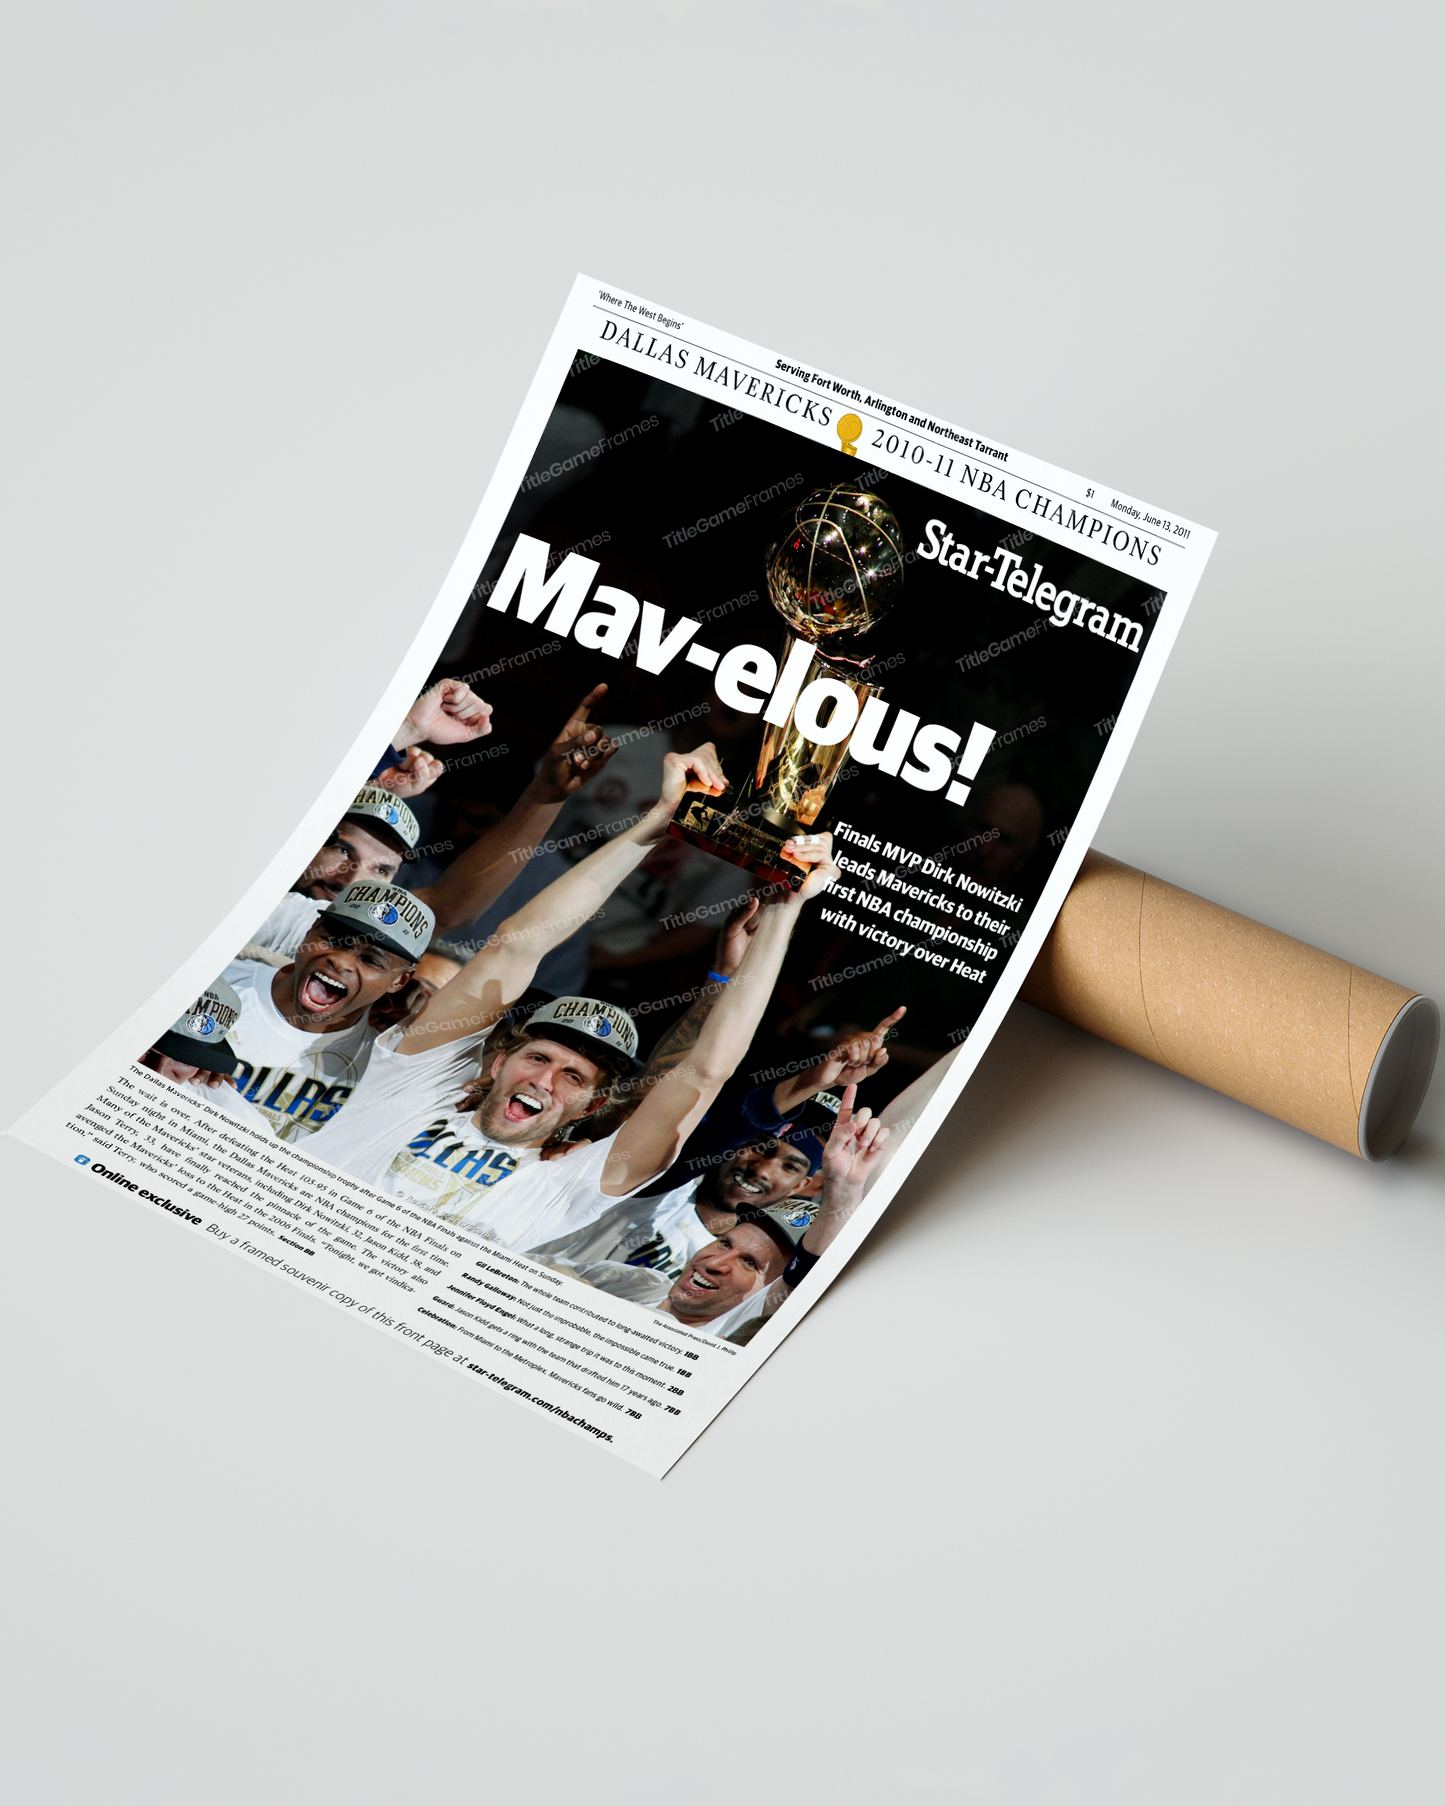 2011 Dallas Mavericks NBA Finals Champions Framed Newspaper - Mav-elous!